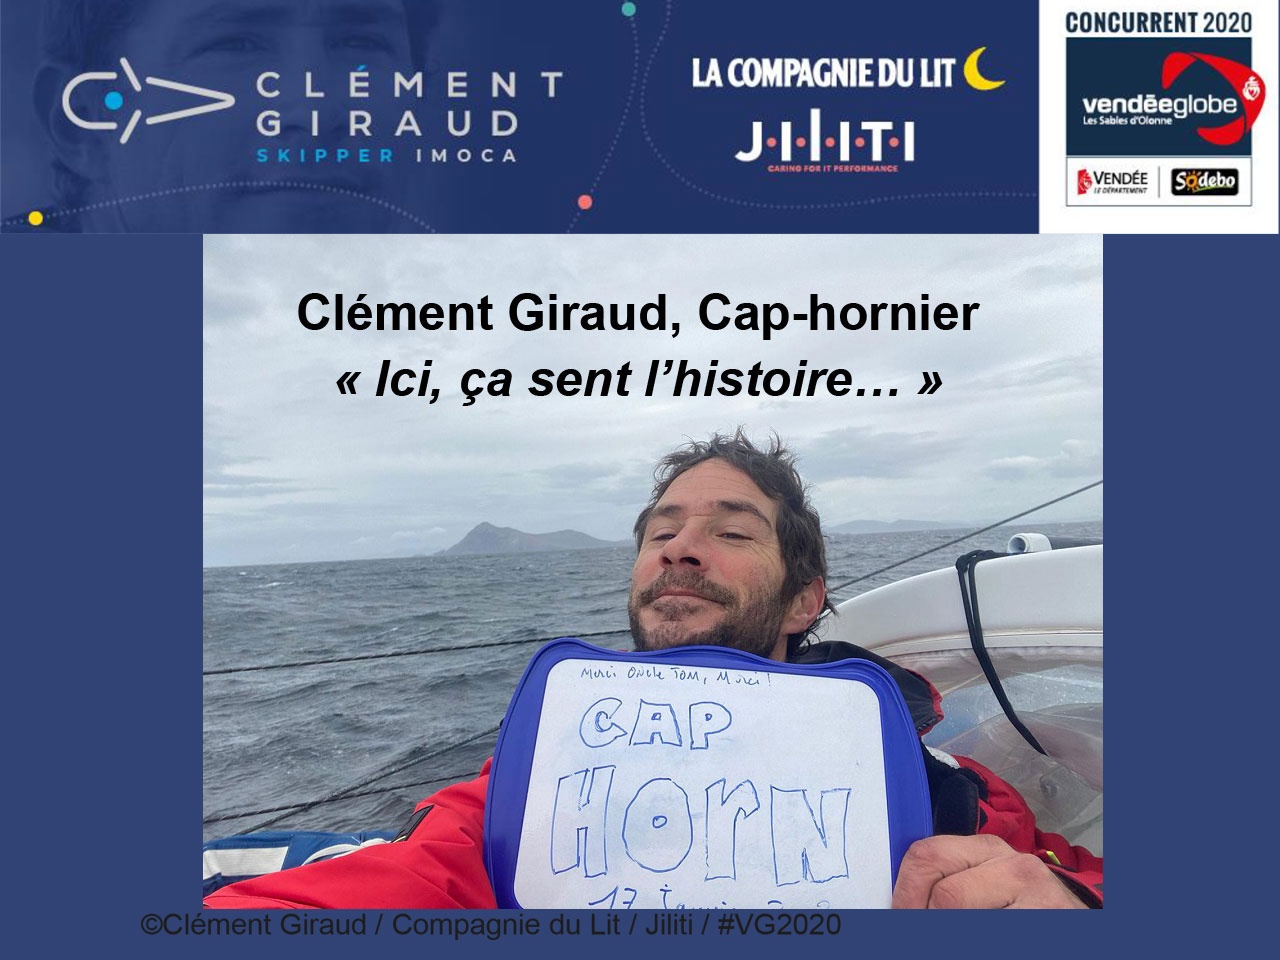 Clément Giraud skipper de Compagnie du lit / JIliti, Cap-hornier !